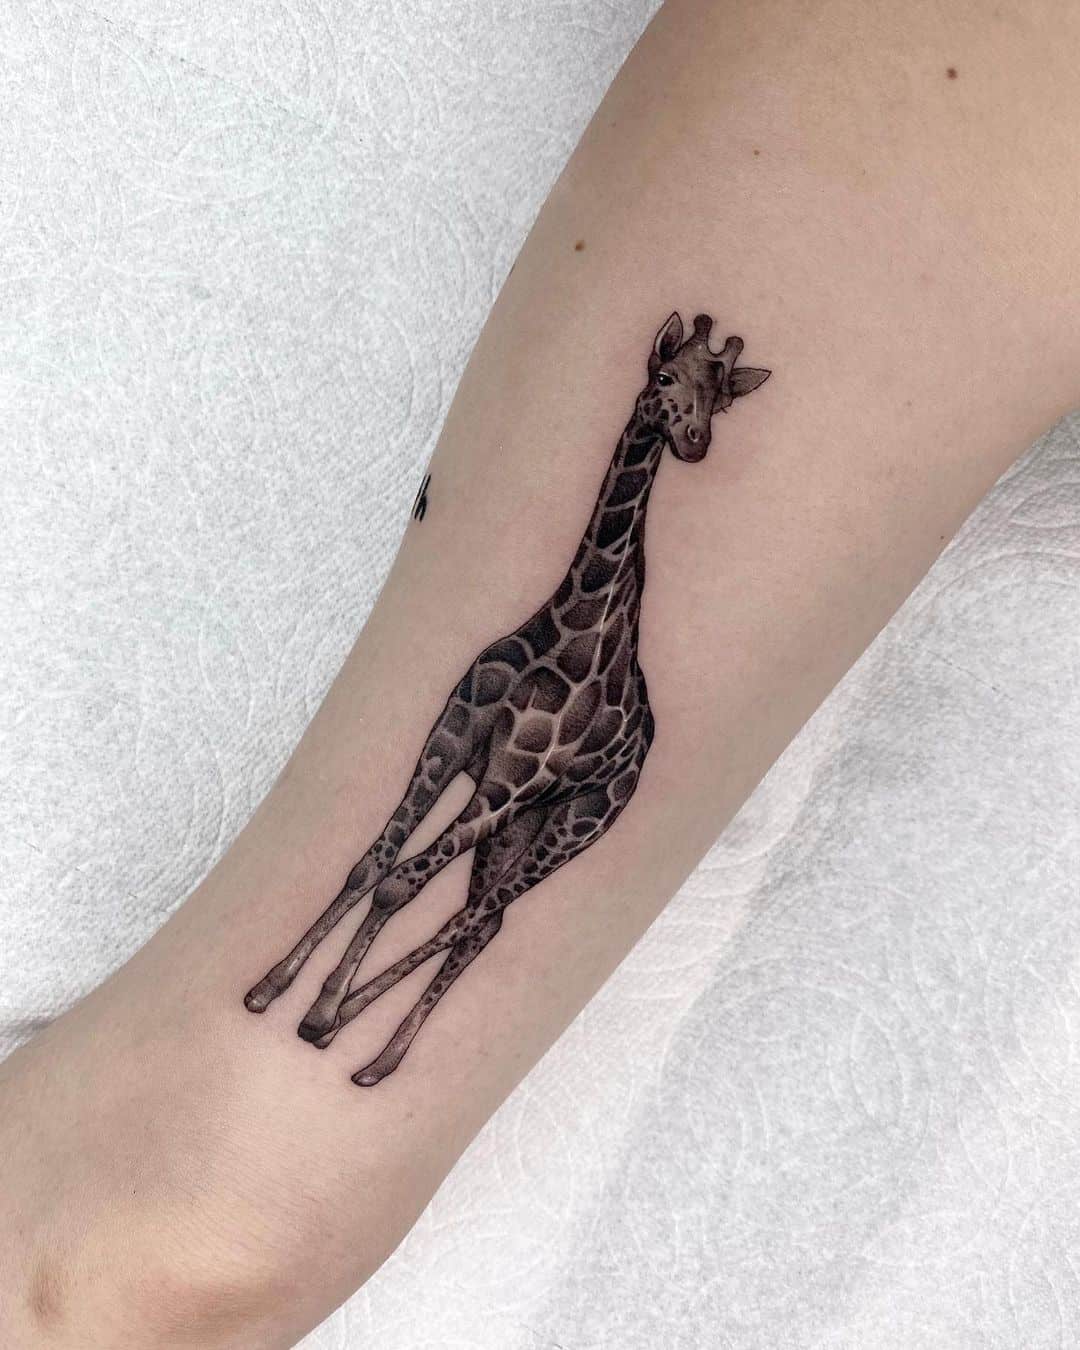 Black and grey giraffe tattoo on the left calf | Tatuaggi, Tatuaggi uomo  piccoli, Piccoli